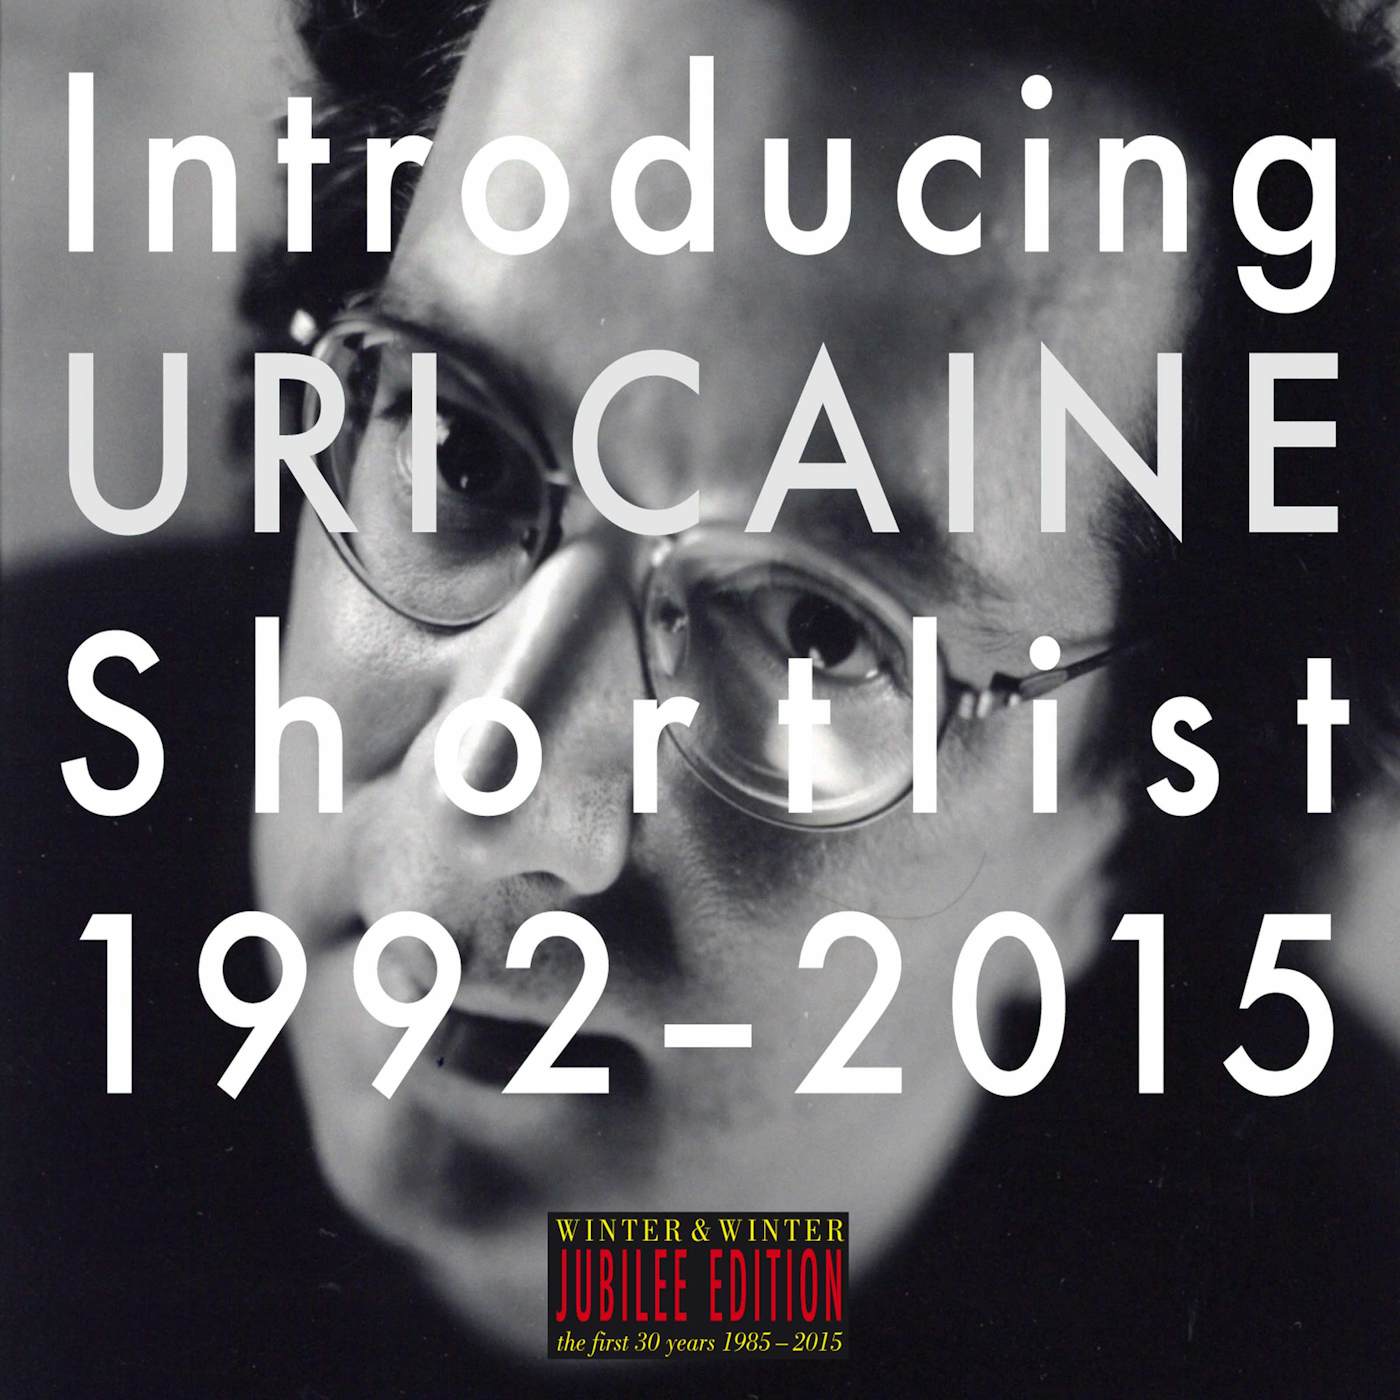 INTRODUCING URI CAINE: SHORTLIST 1992-2015 CD